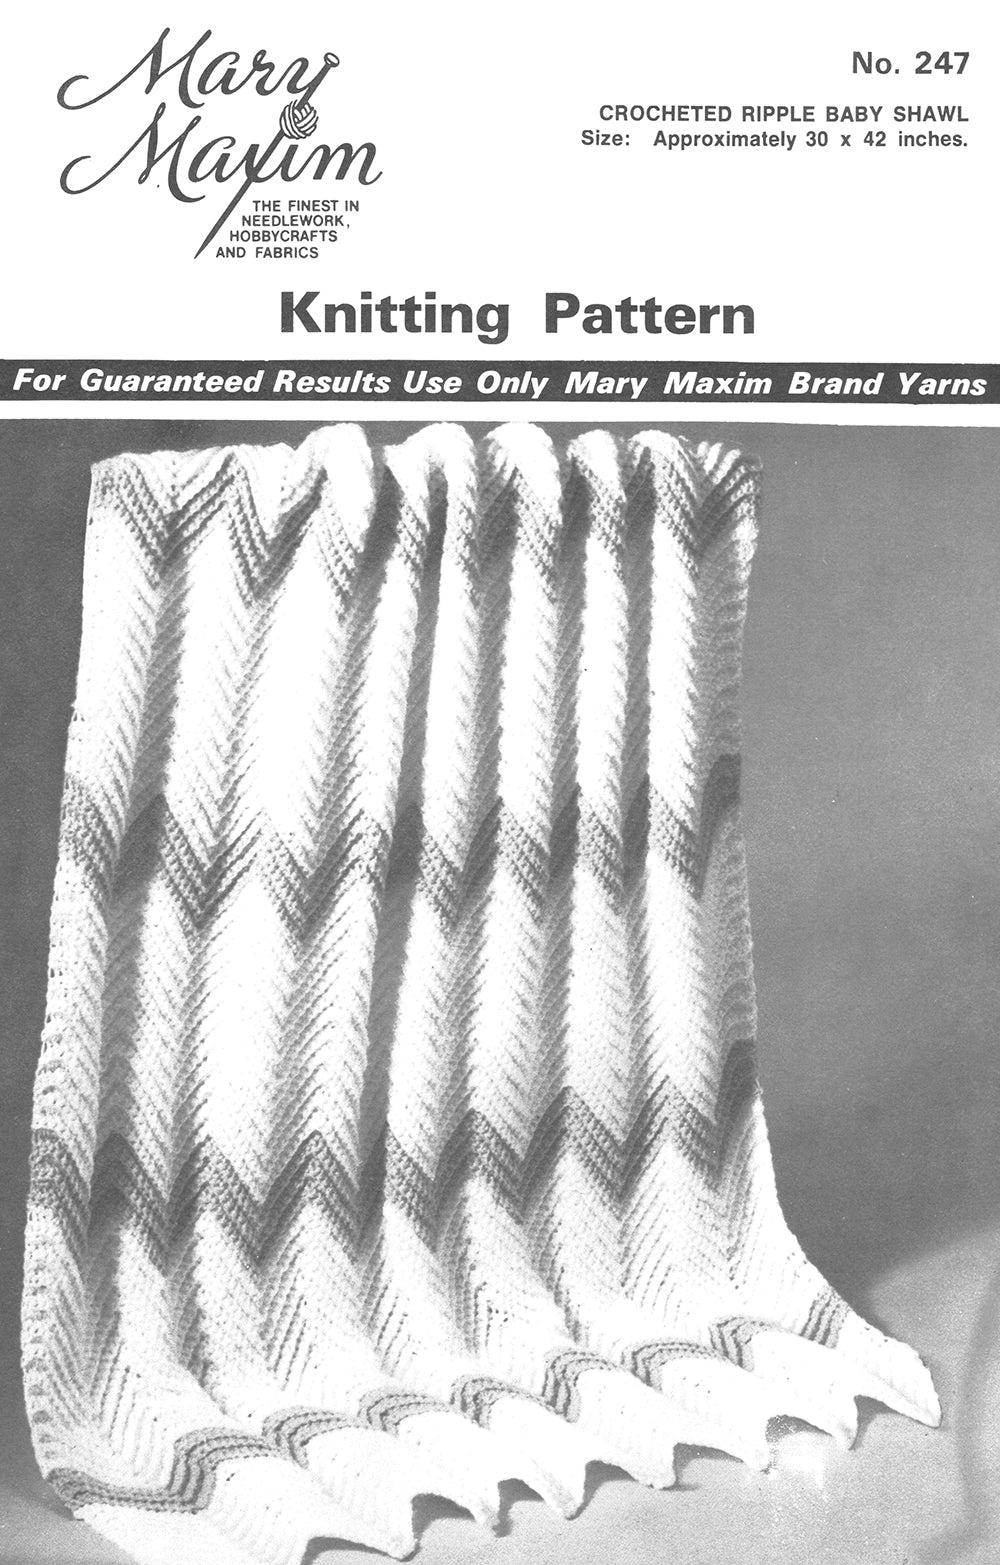 Crocheted Ripple Baby Shawl Pattern